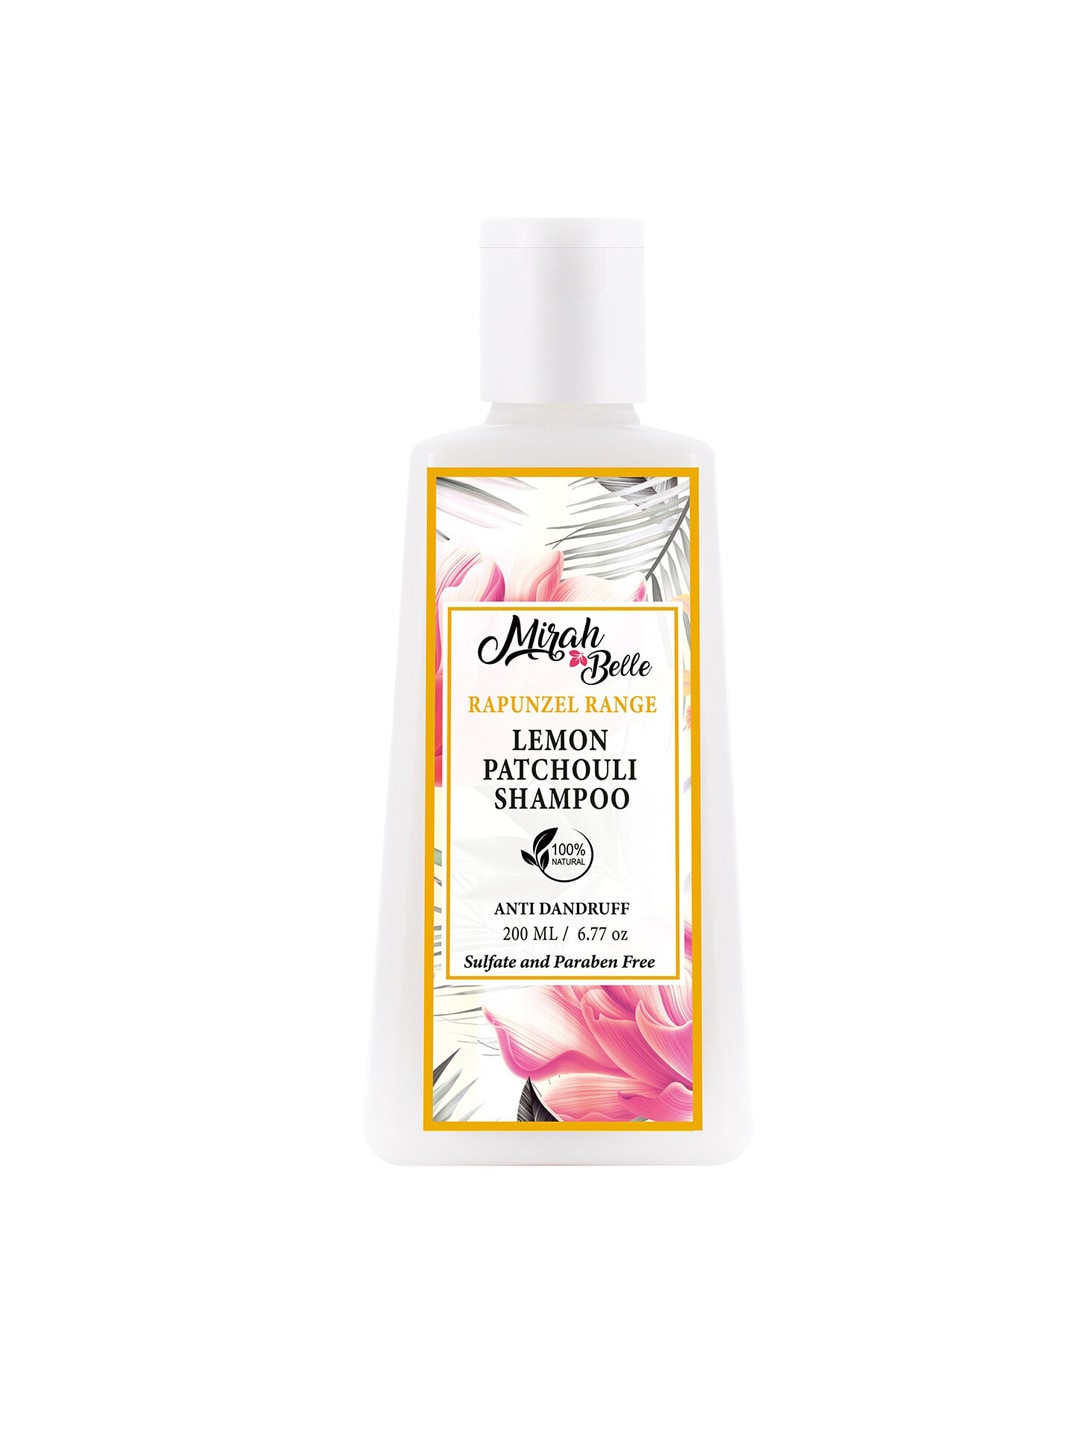 Mirah Belle Lemon Patchouli Anti-Dandruff Shampoo - 200 ml Price in India